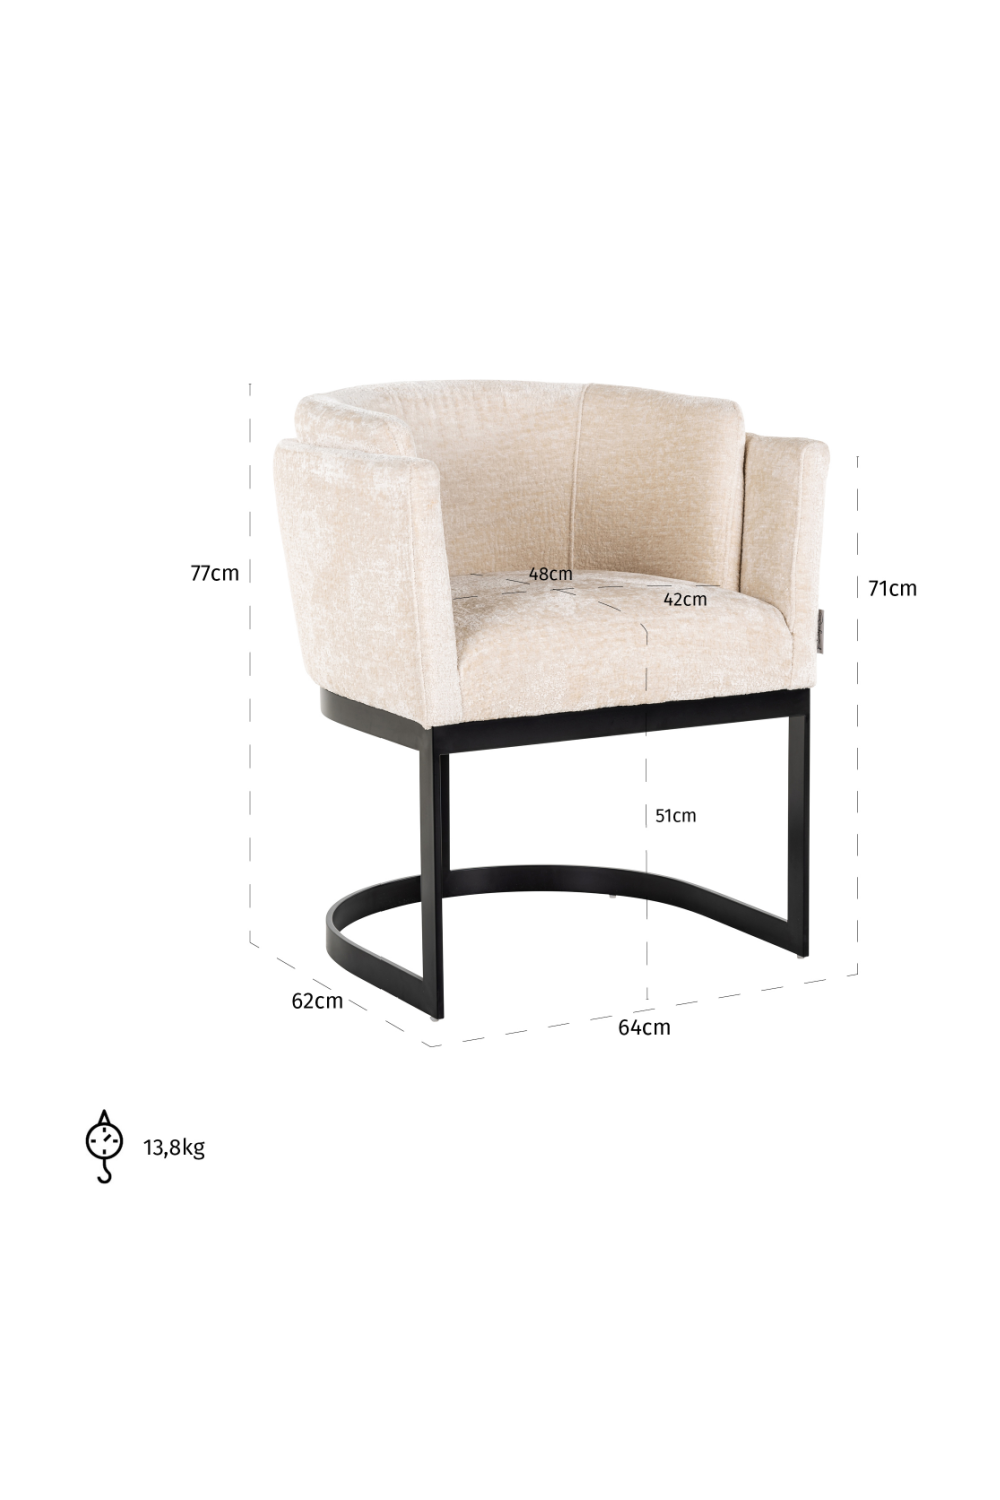 White Chenille Modern Chair | OROA Emerson | OROA.com